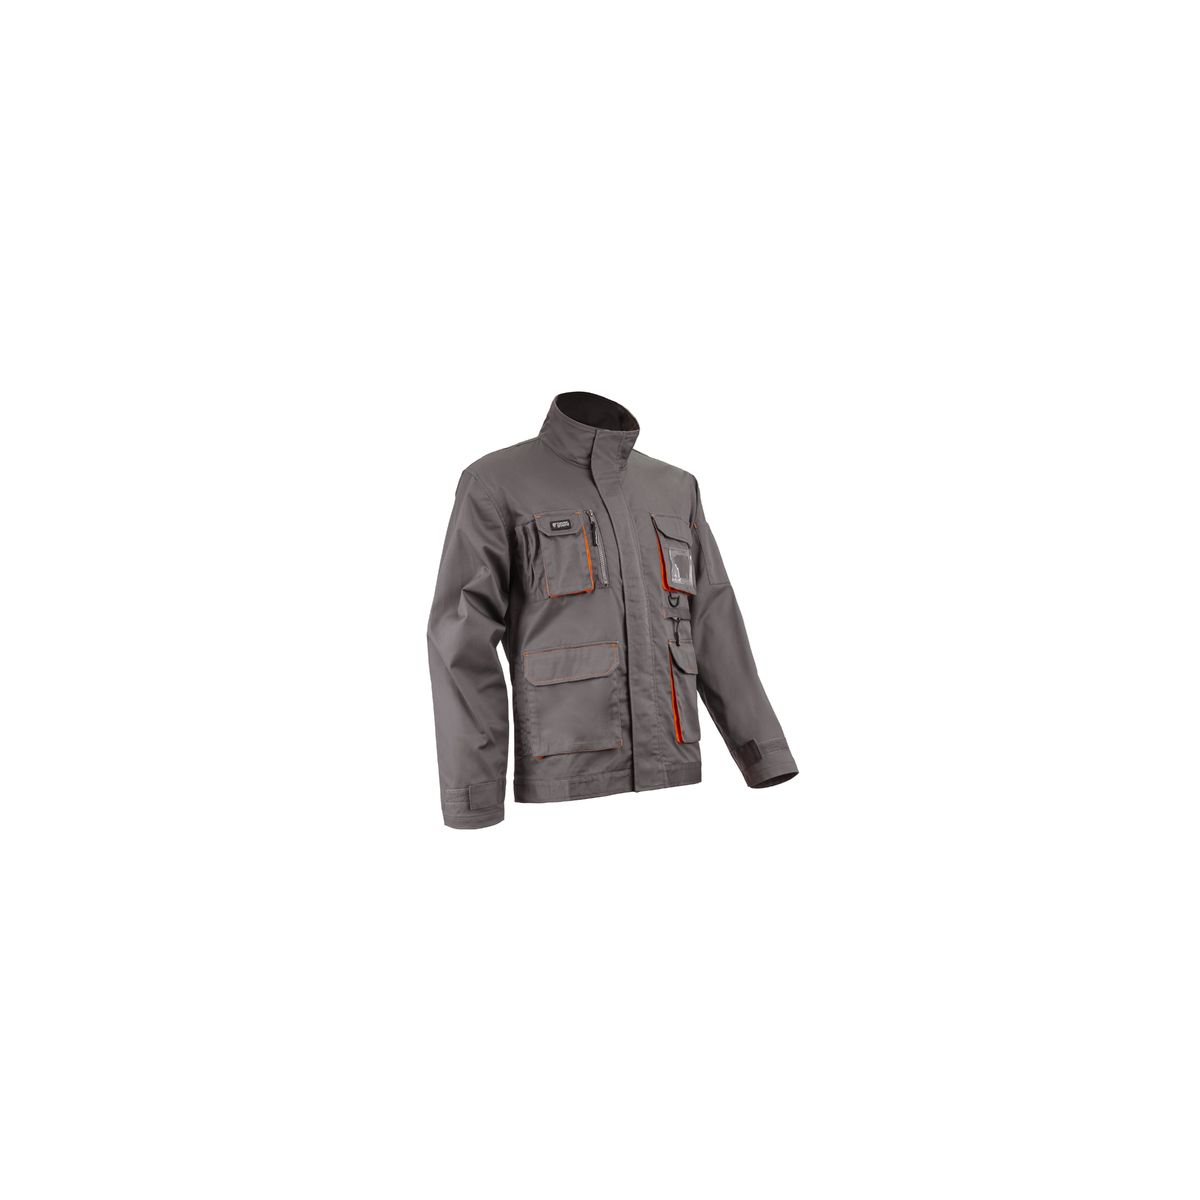 PADDOCK II Veste, gris/orange, 60%CO/40%PES, 245g/m² - COVERGUARD - Taille L 0